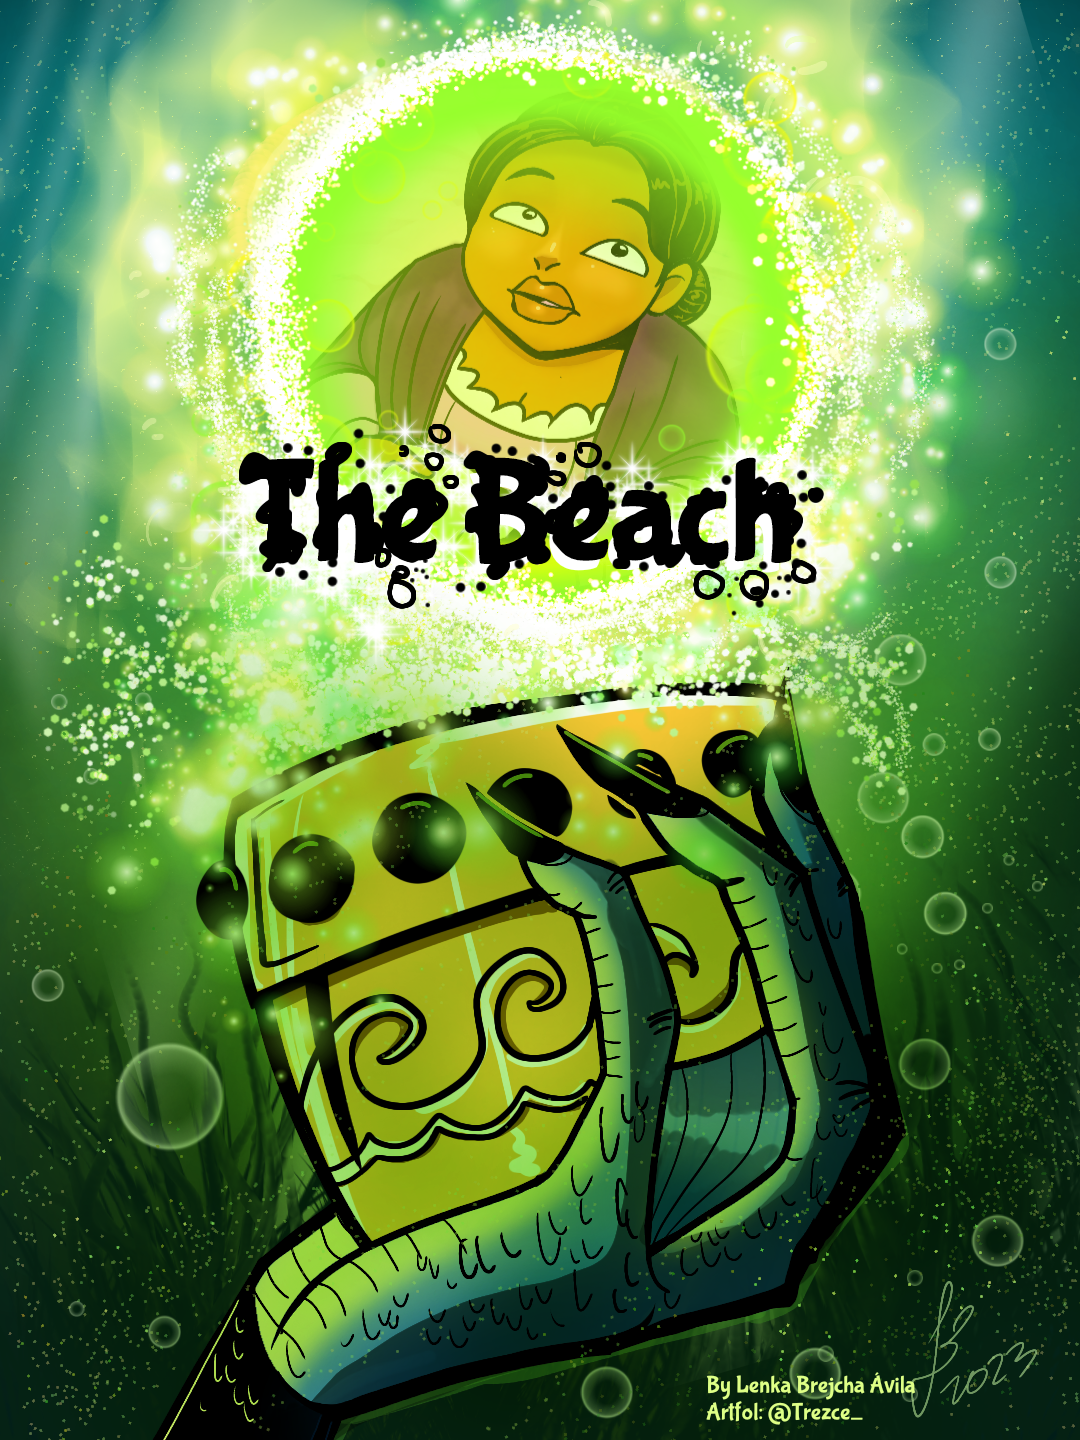 The beach comic cover